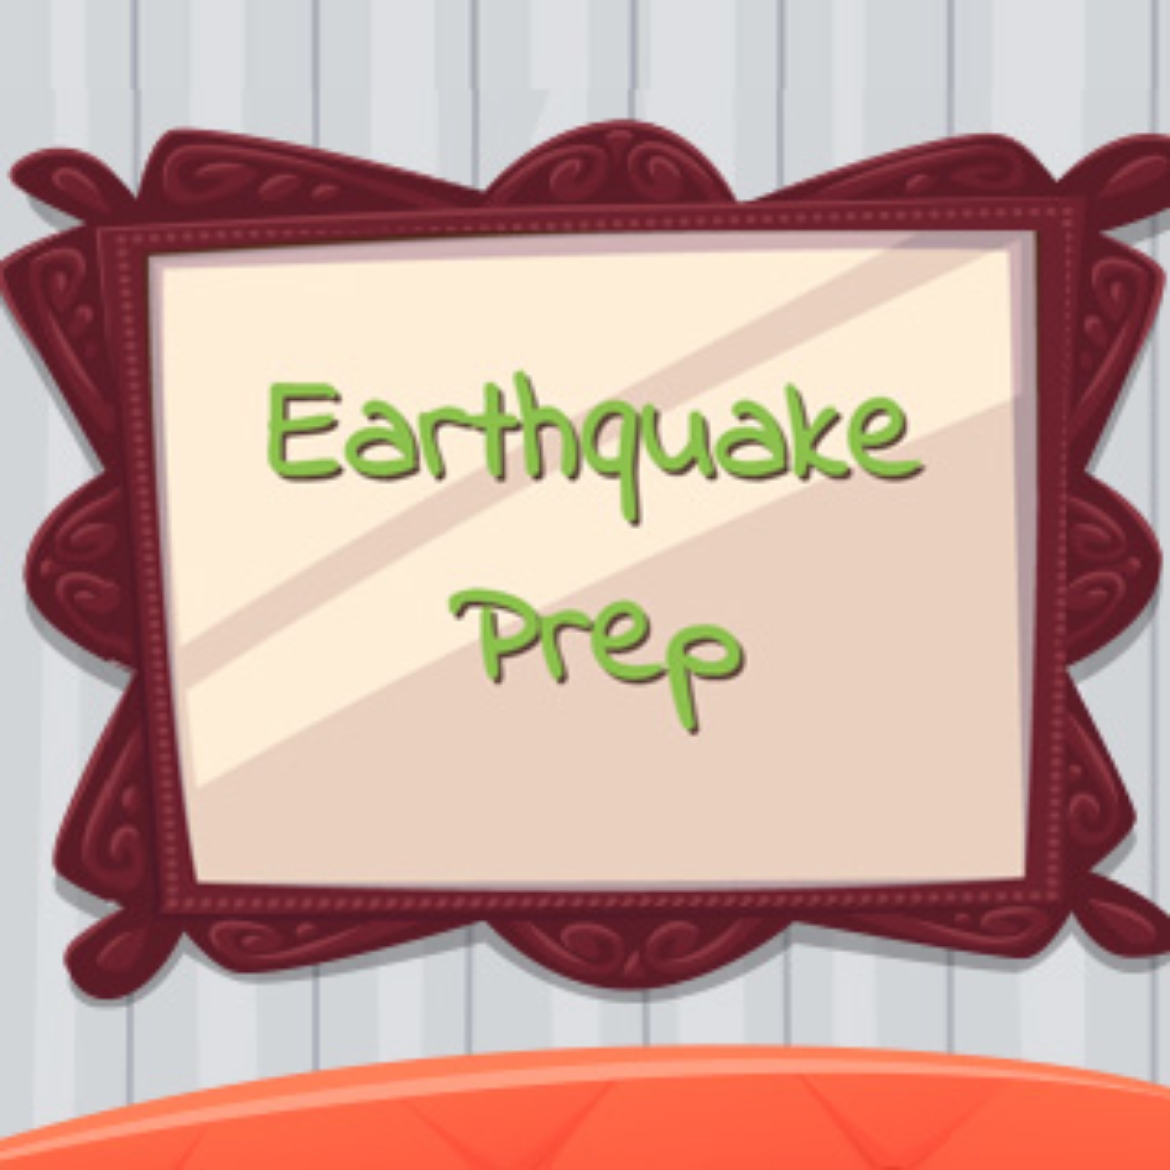 Earthquake Preparedness for Kids Online Training Course